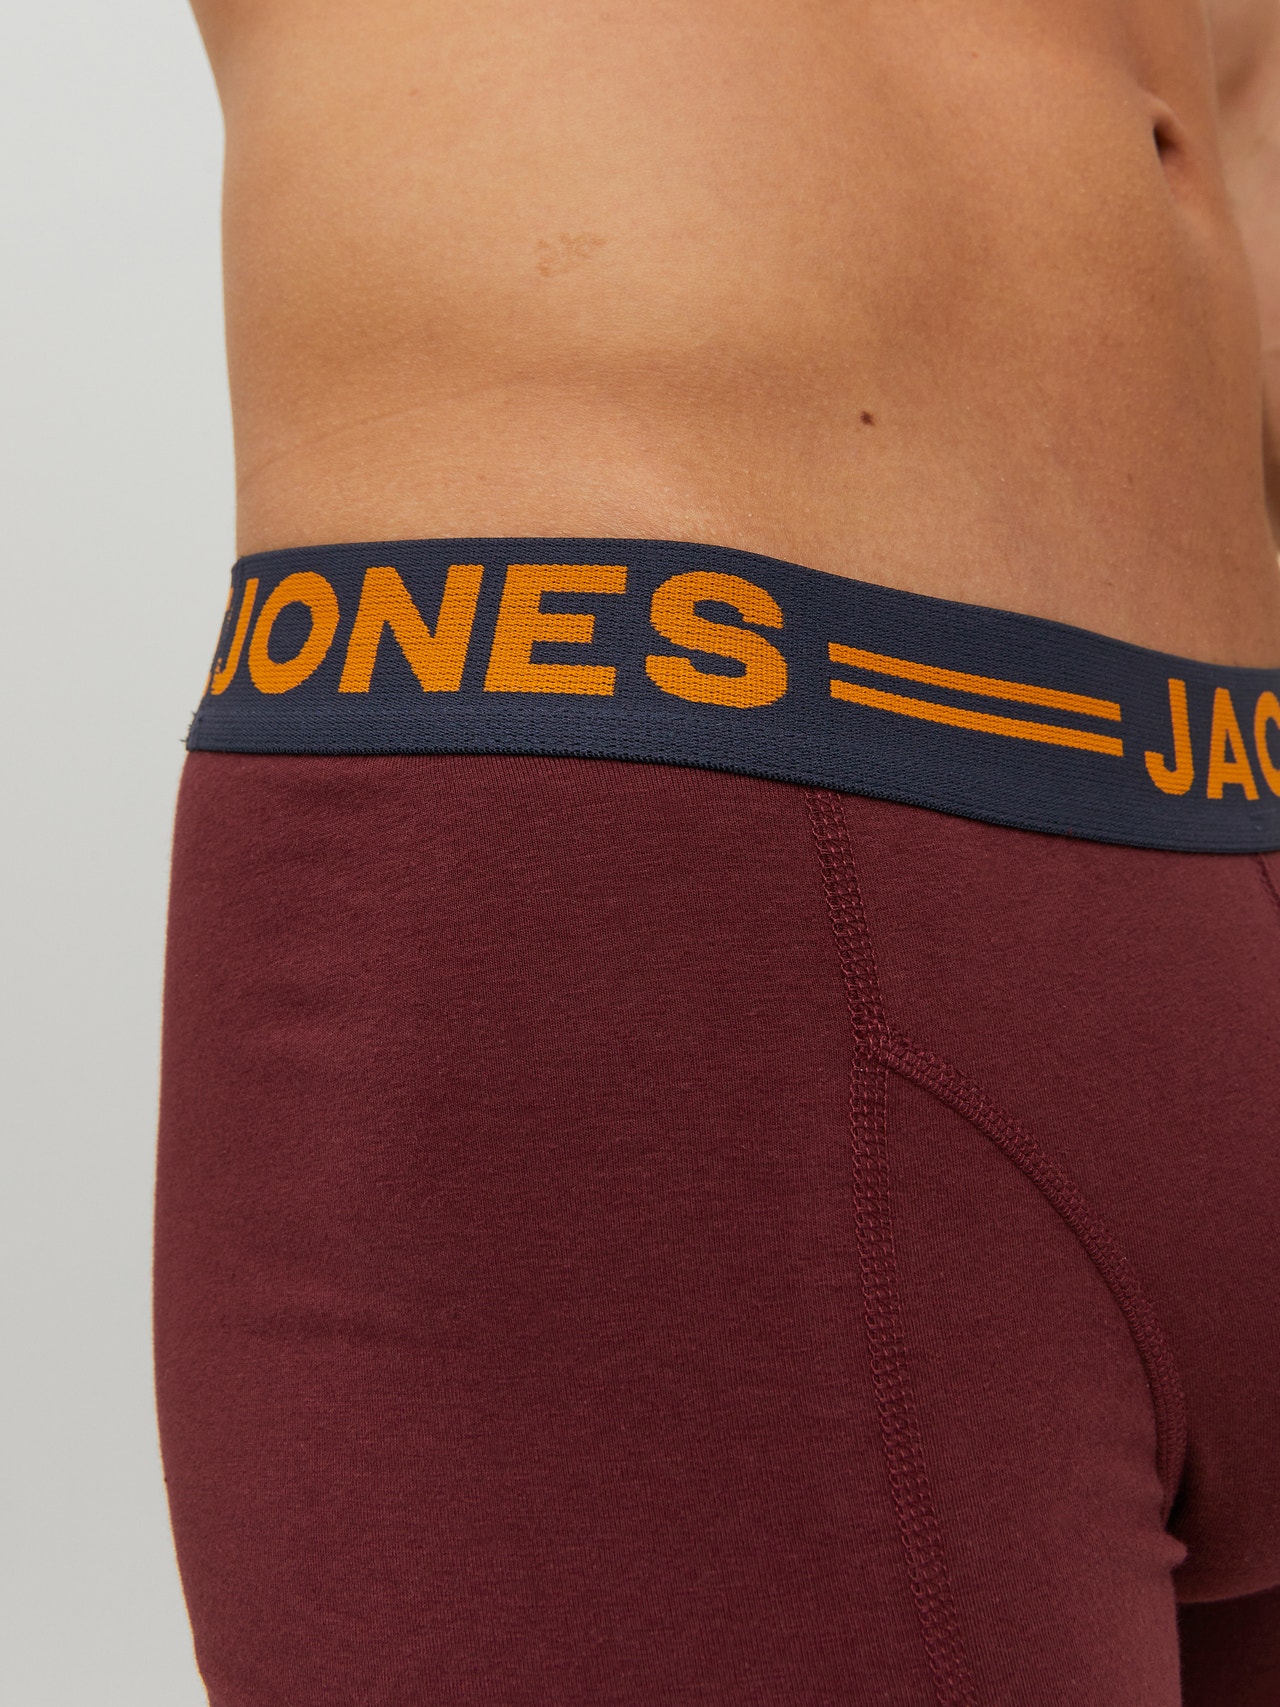 Jack & Jones 3-pack Boxershorts -Burgundy - 12113943